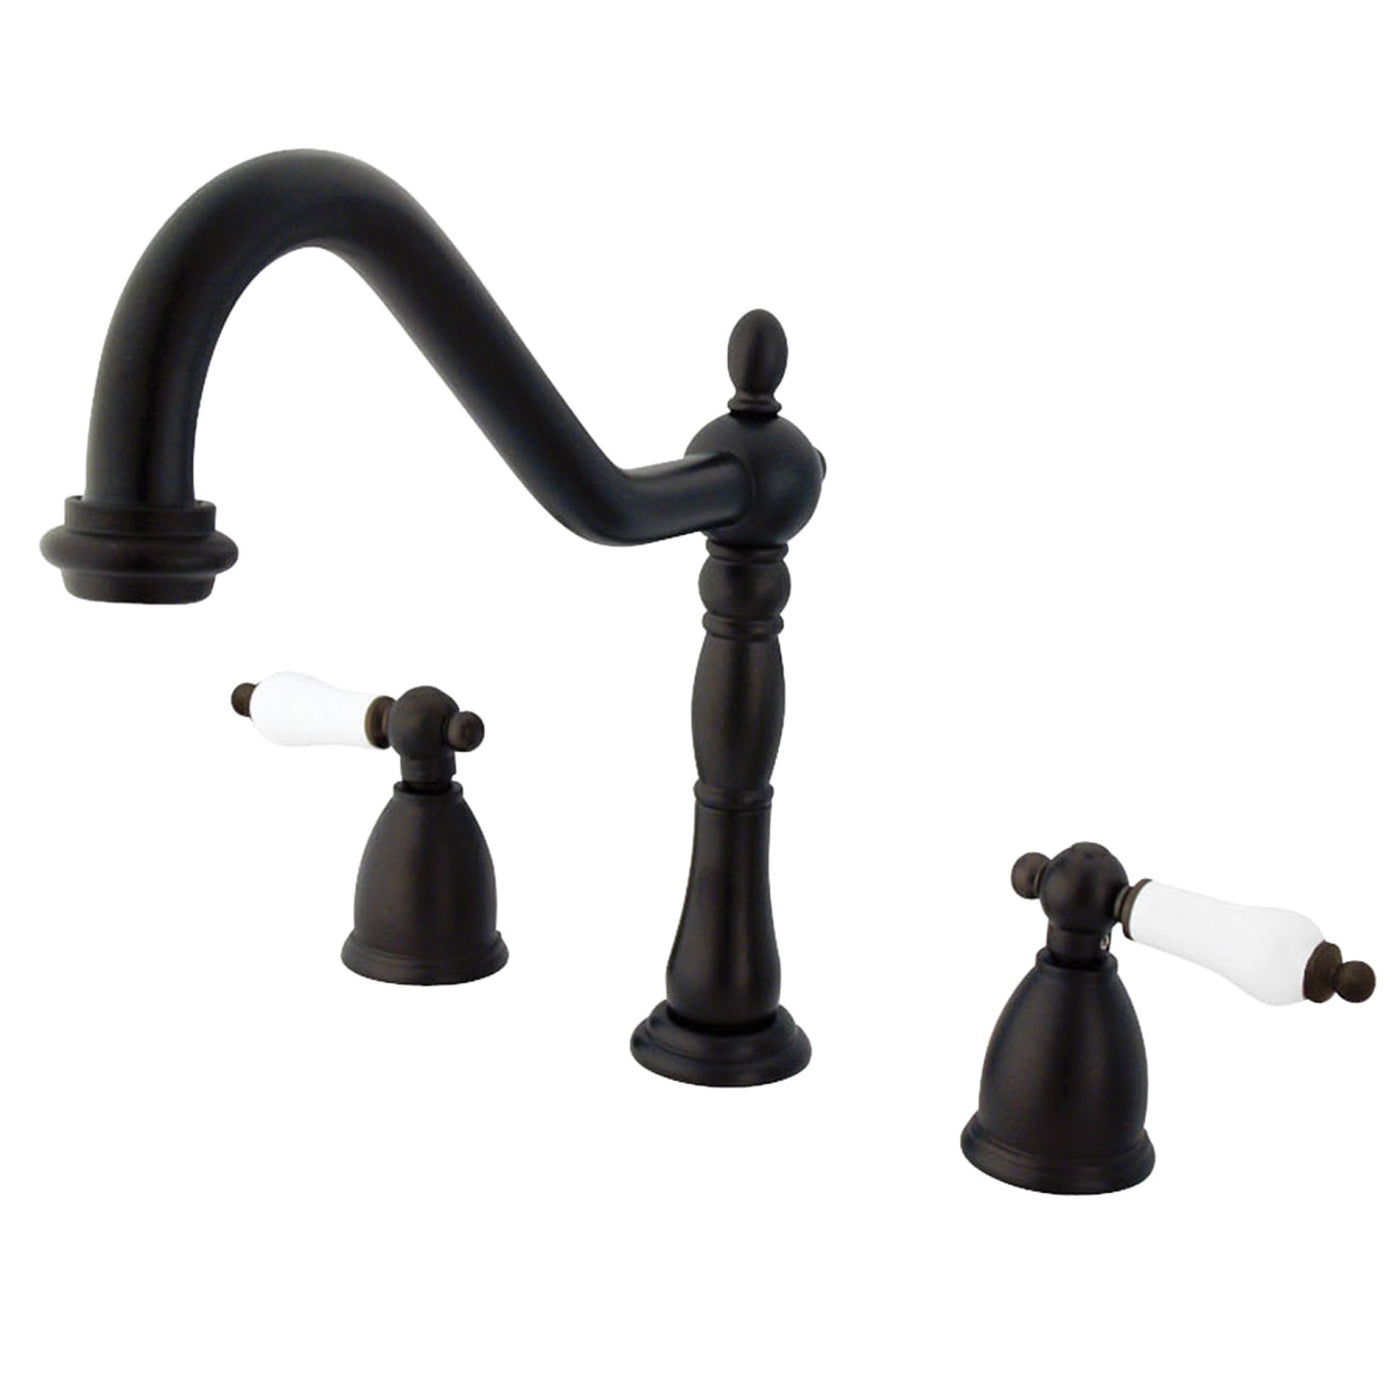 Elements of Design EB1795PLLS Widespread Kitchen Faucet, Oil Rubbed Bronze